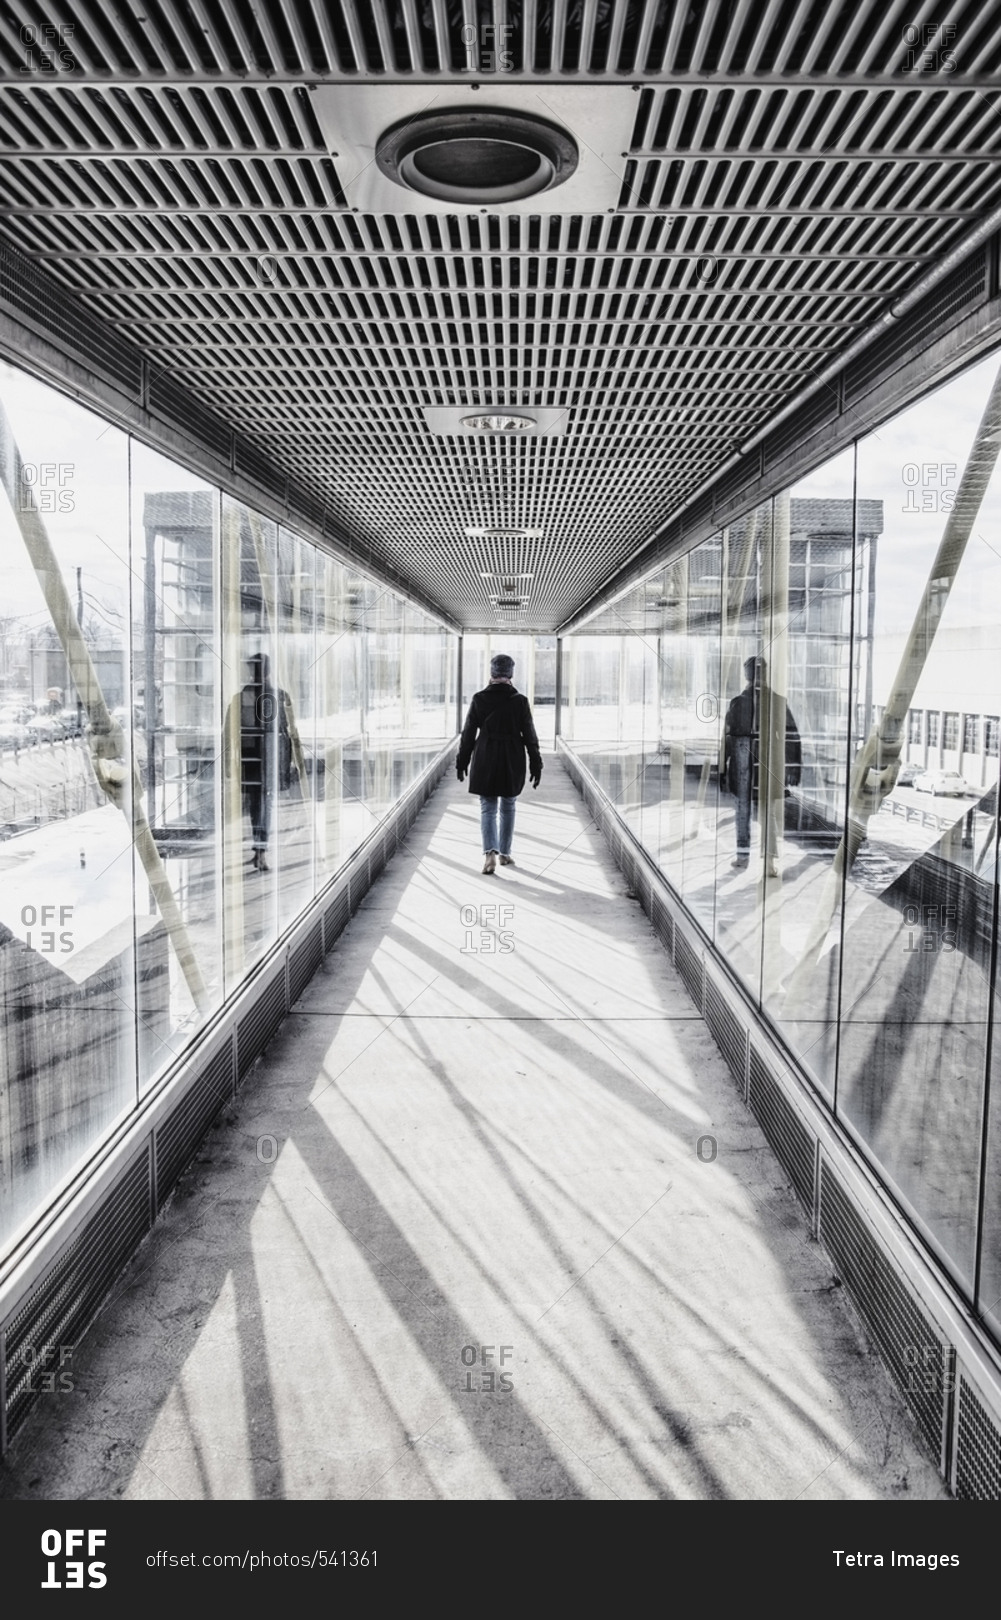 USA, Massachusetts, Boston, Woman walking down glass and metallic walkway at train station